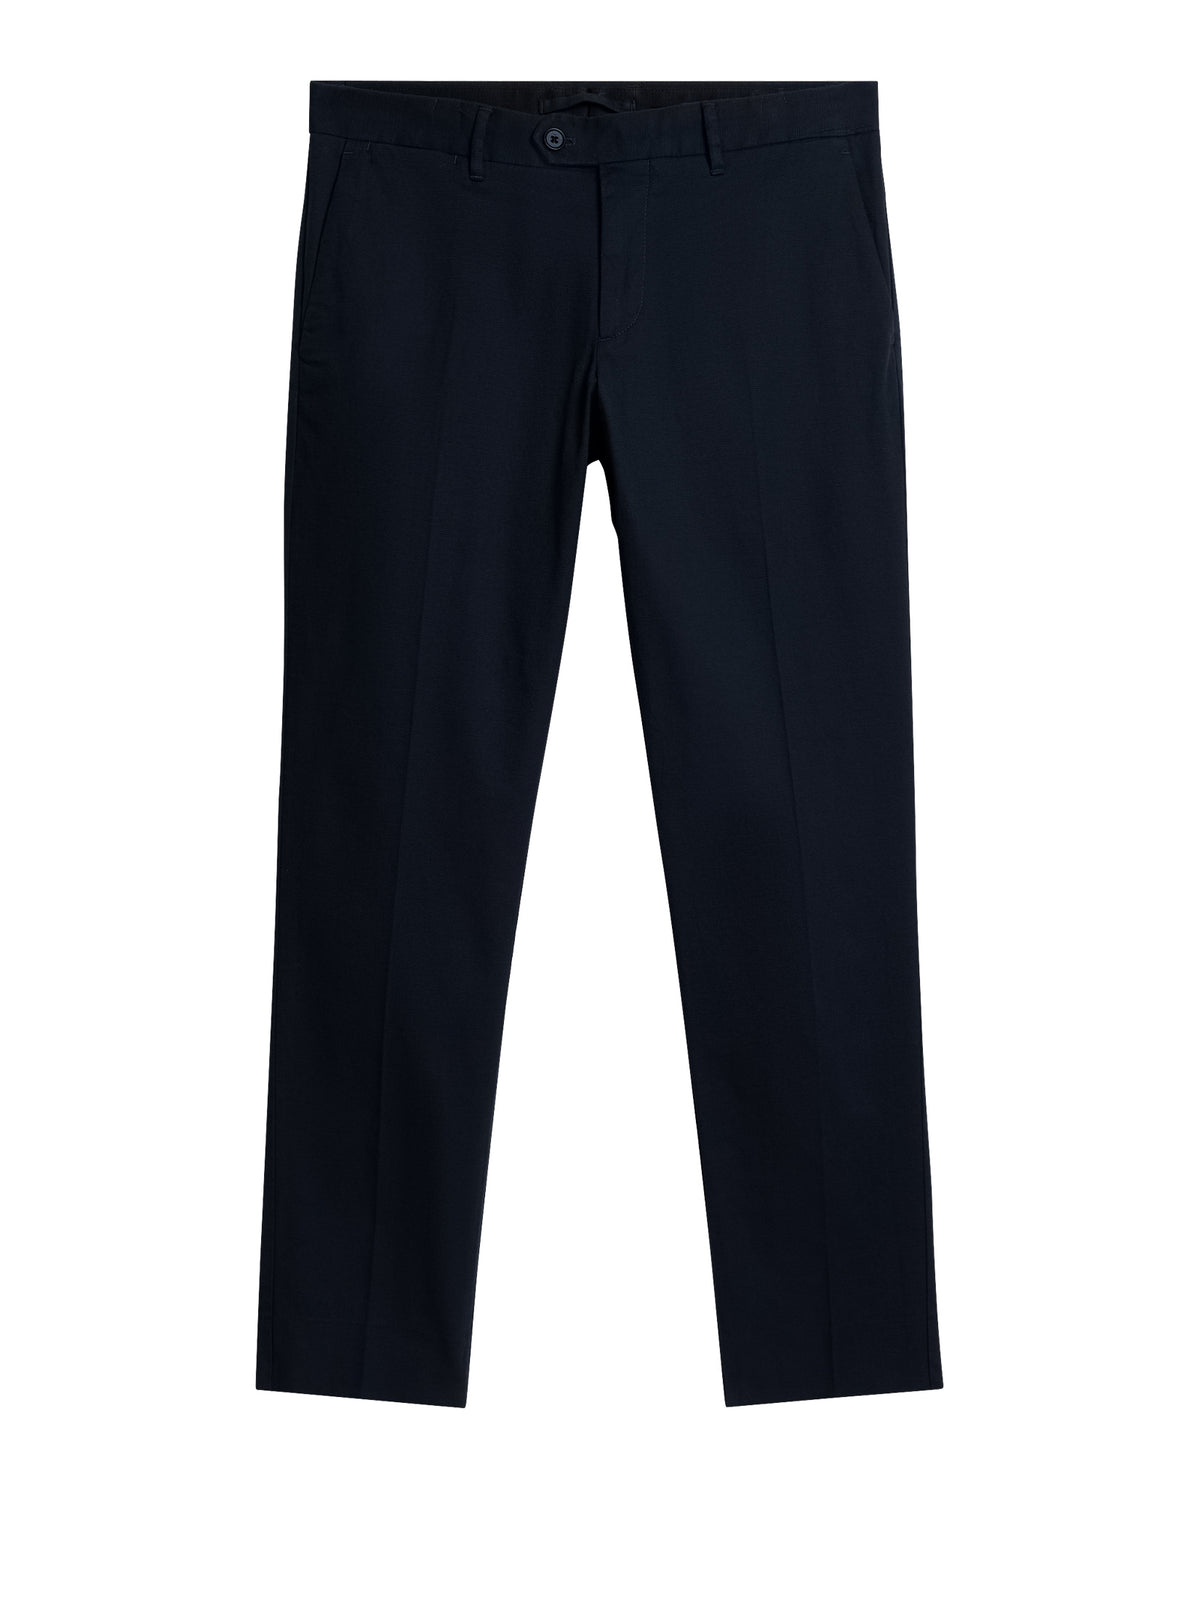 Grant Micro Texture Pants / JL Navy